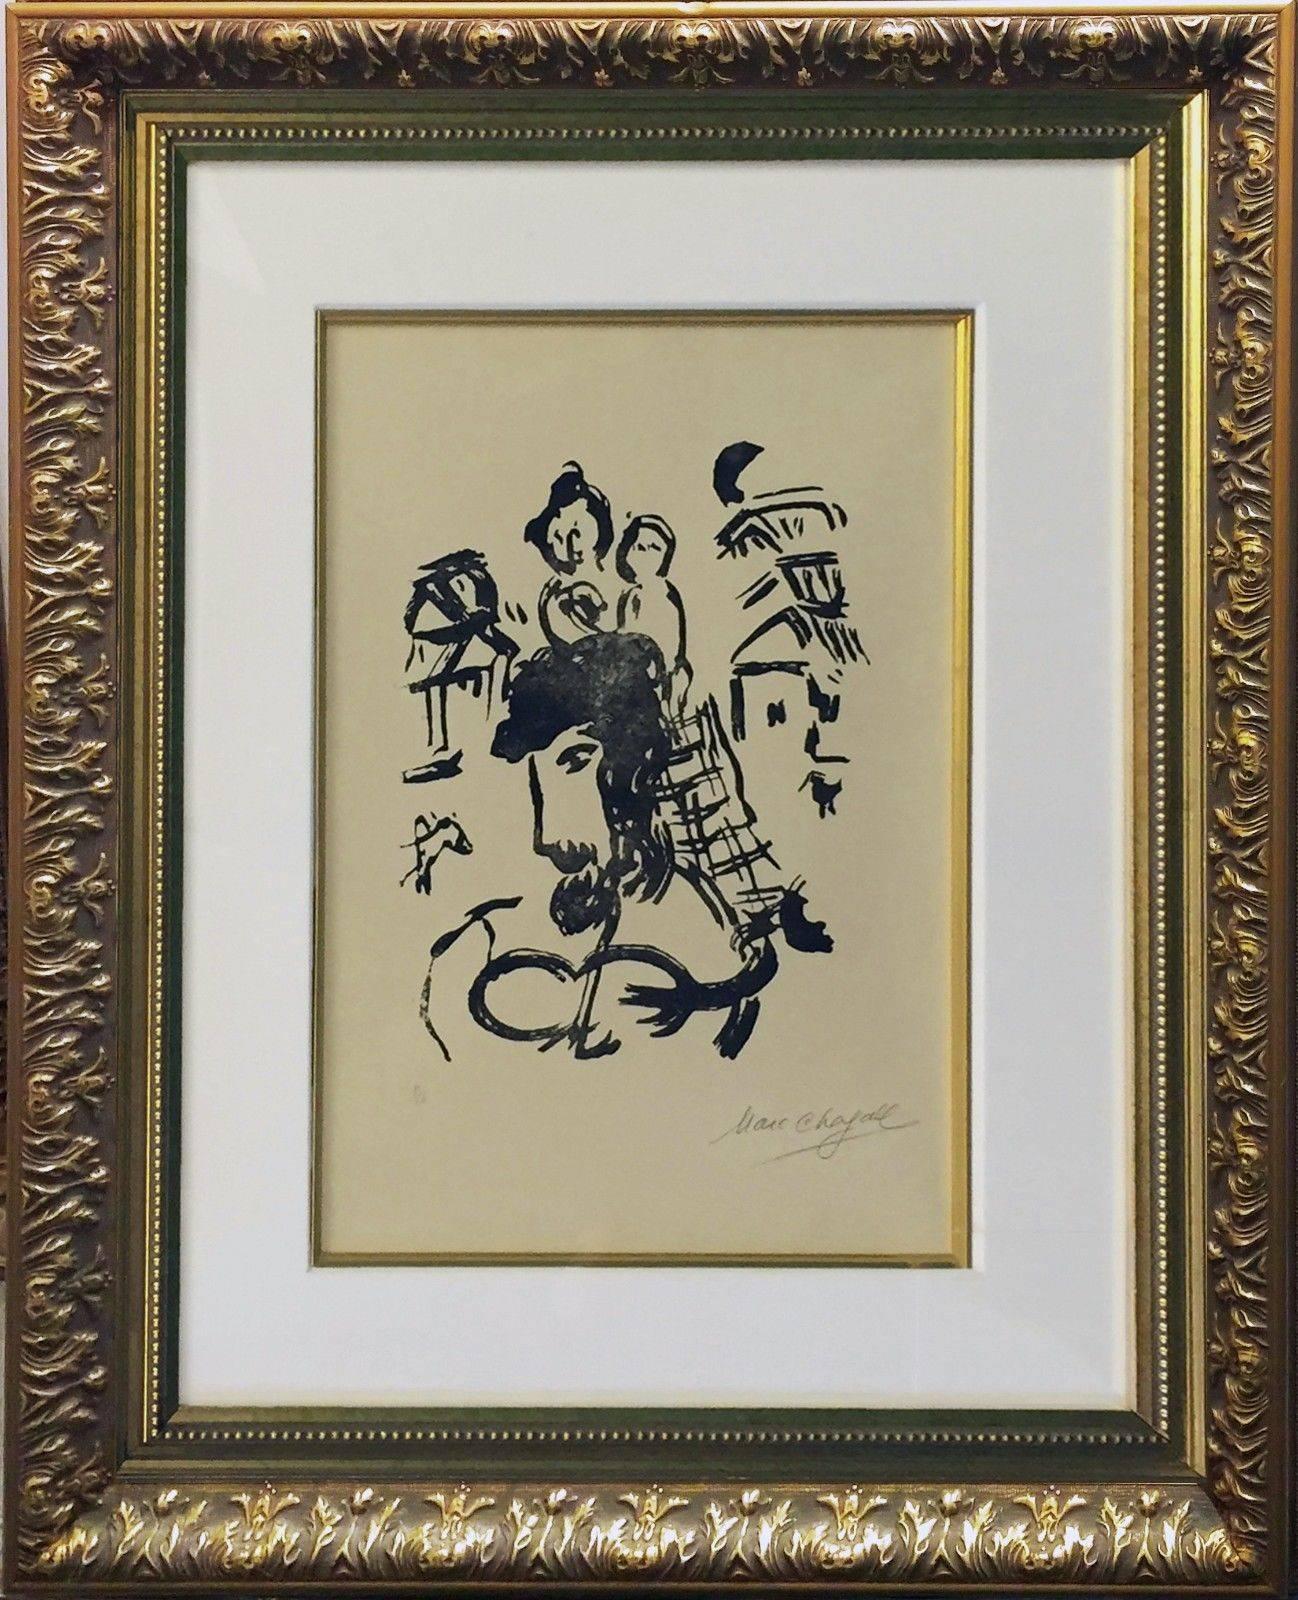 POEMES: GRAVUREN V – Print von Marc Chagall